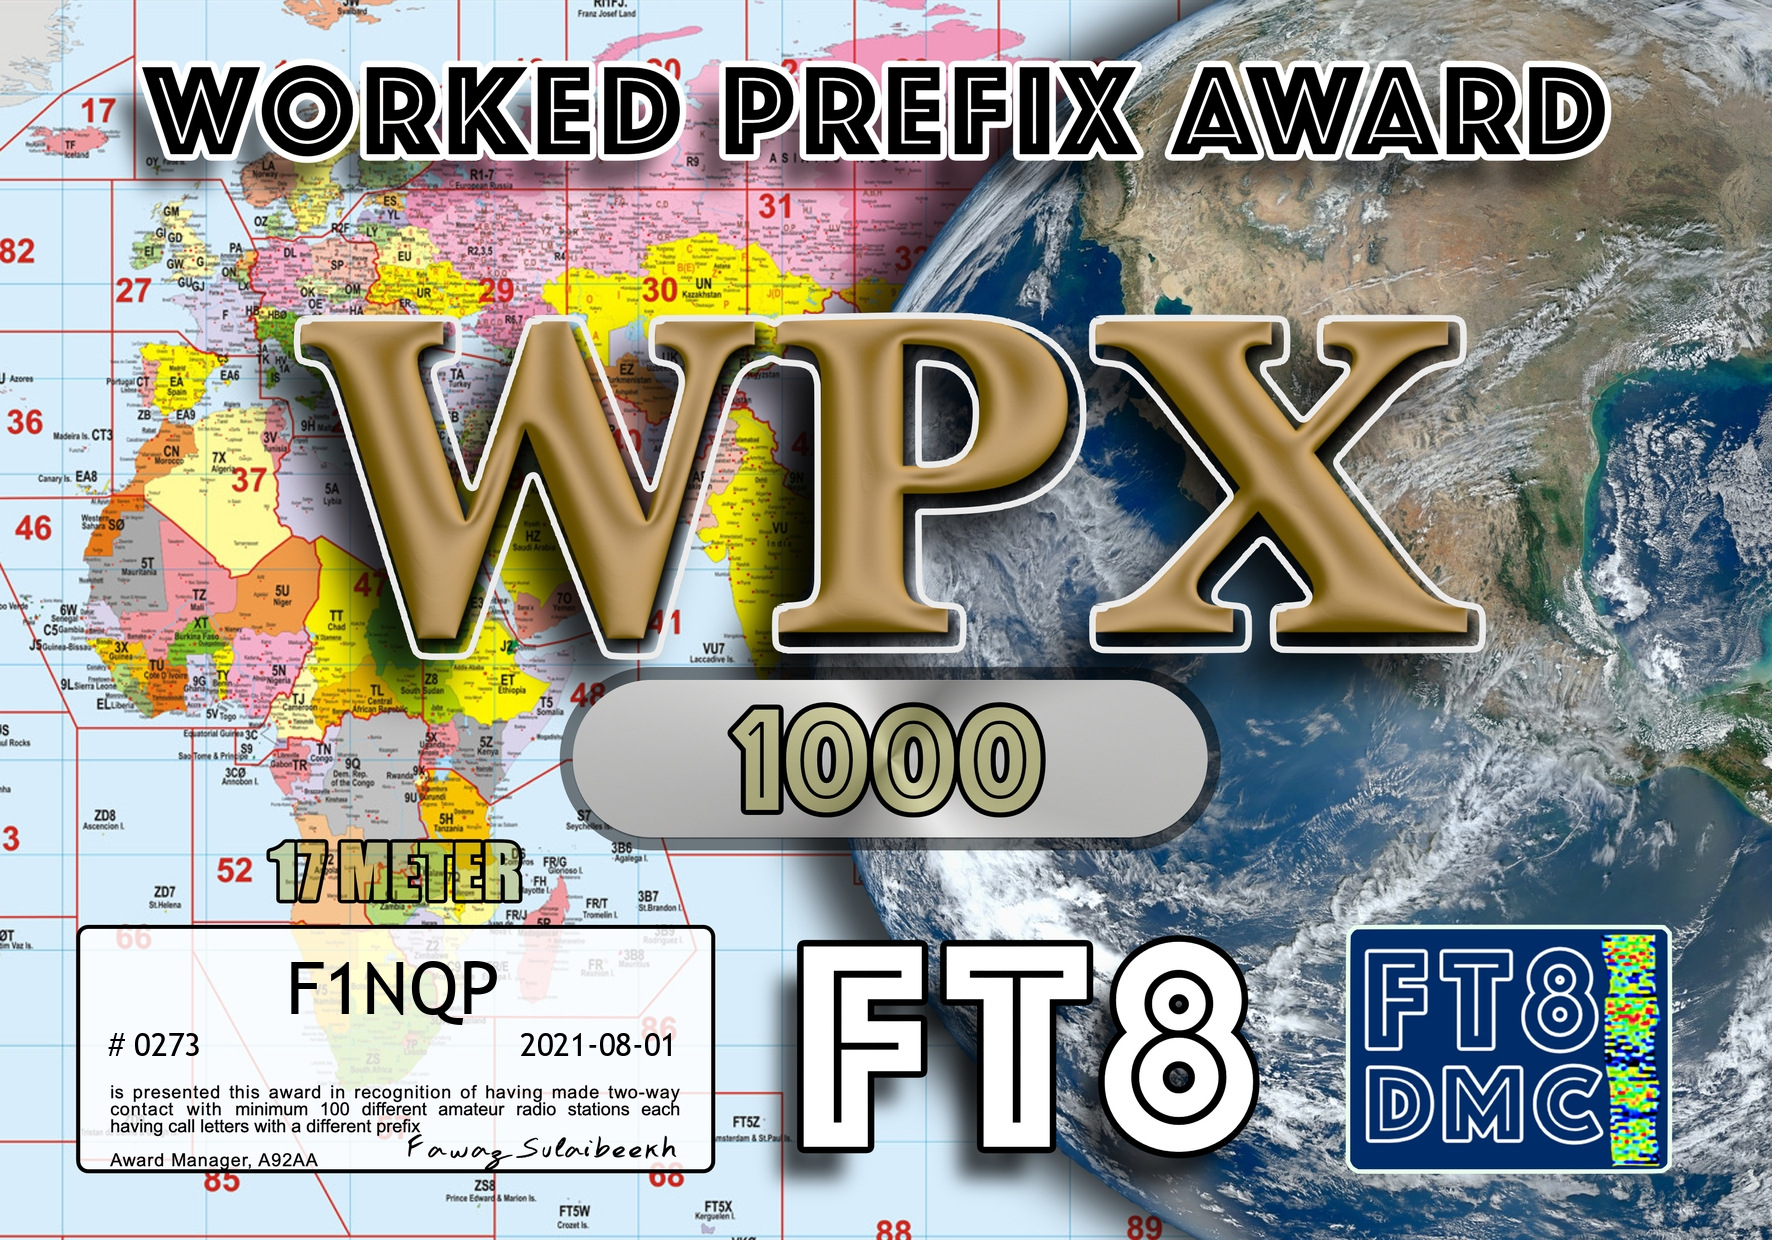 F1NQP-WPX17-1000_FT8DMC.jpg